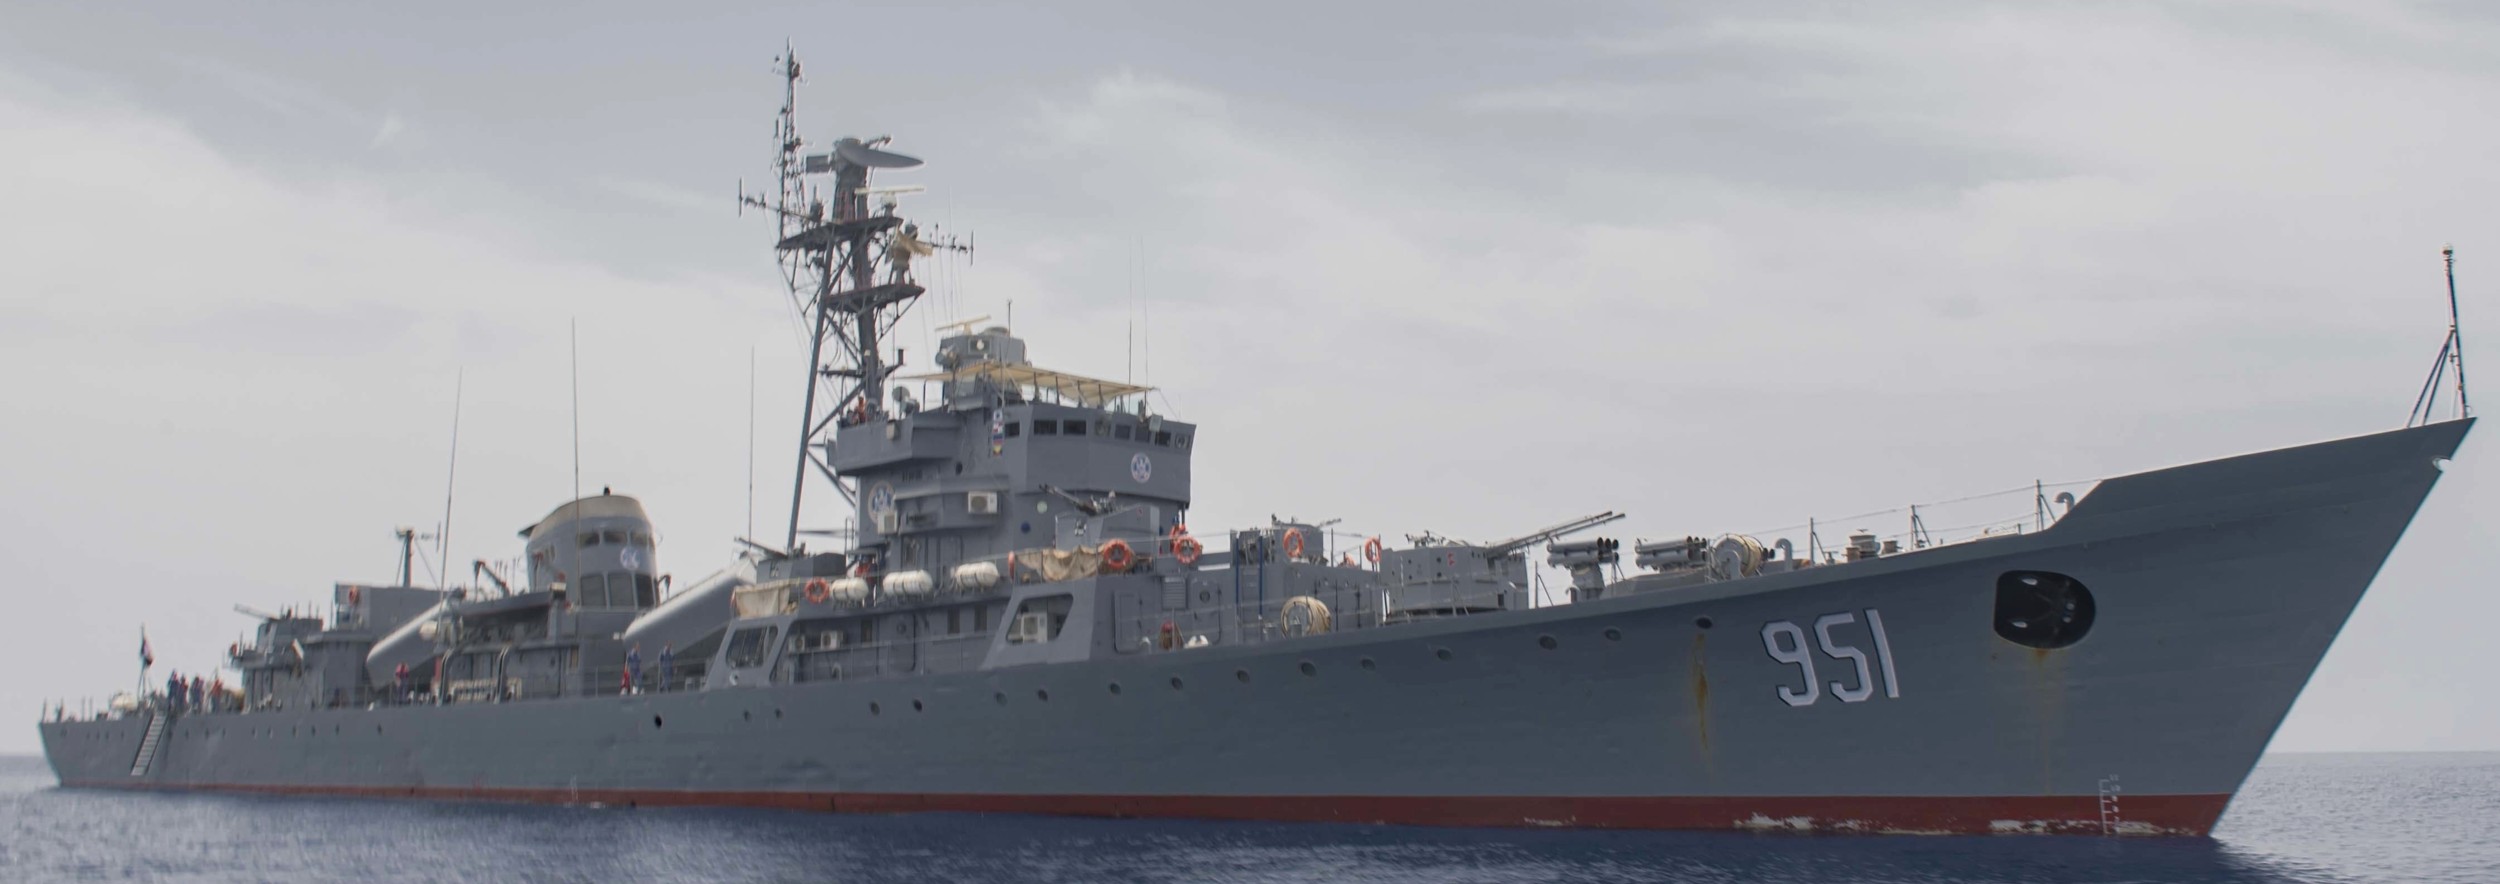 f-951 ens najim al zafir type 053he class frigate egyptian naval force navy 02